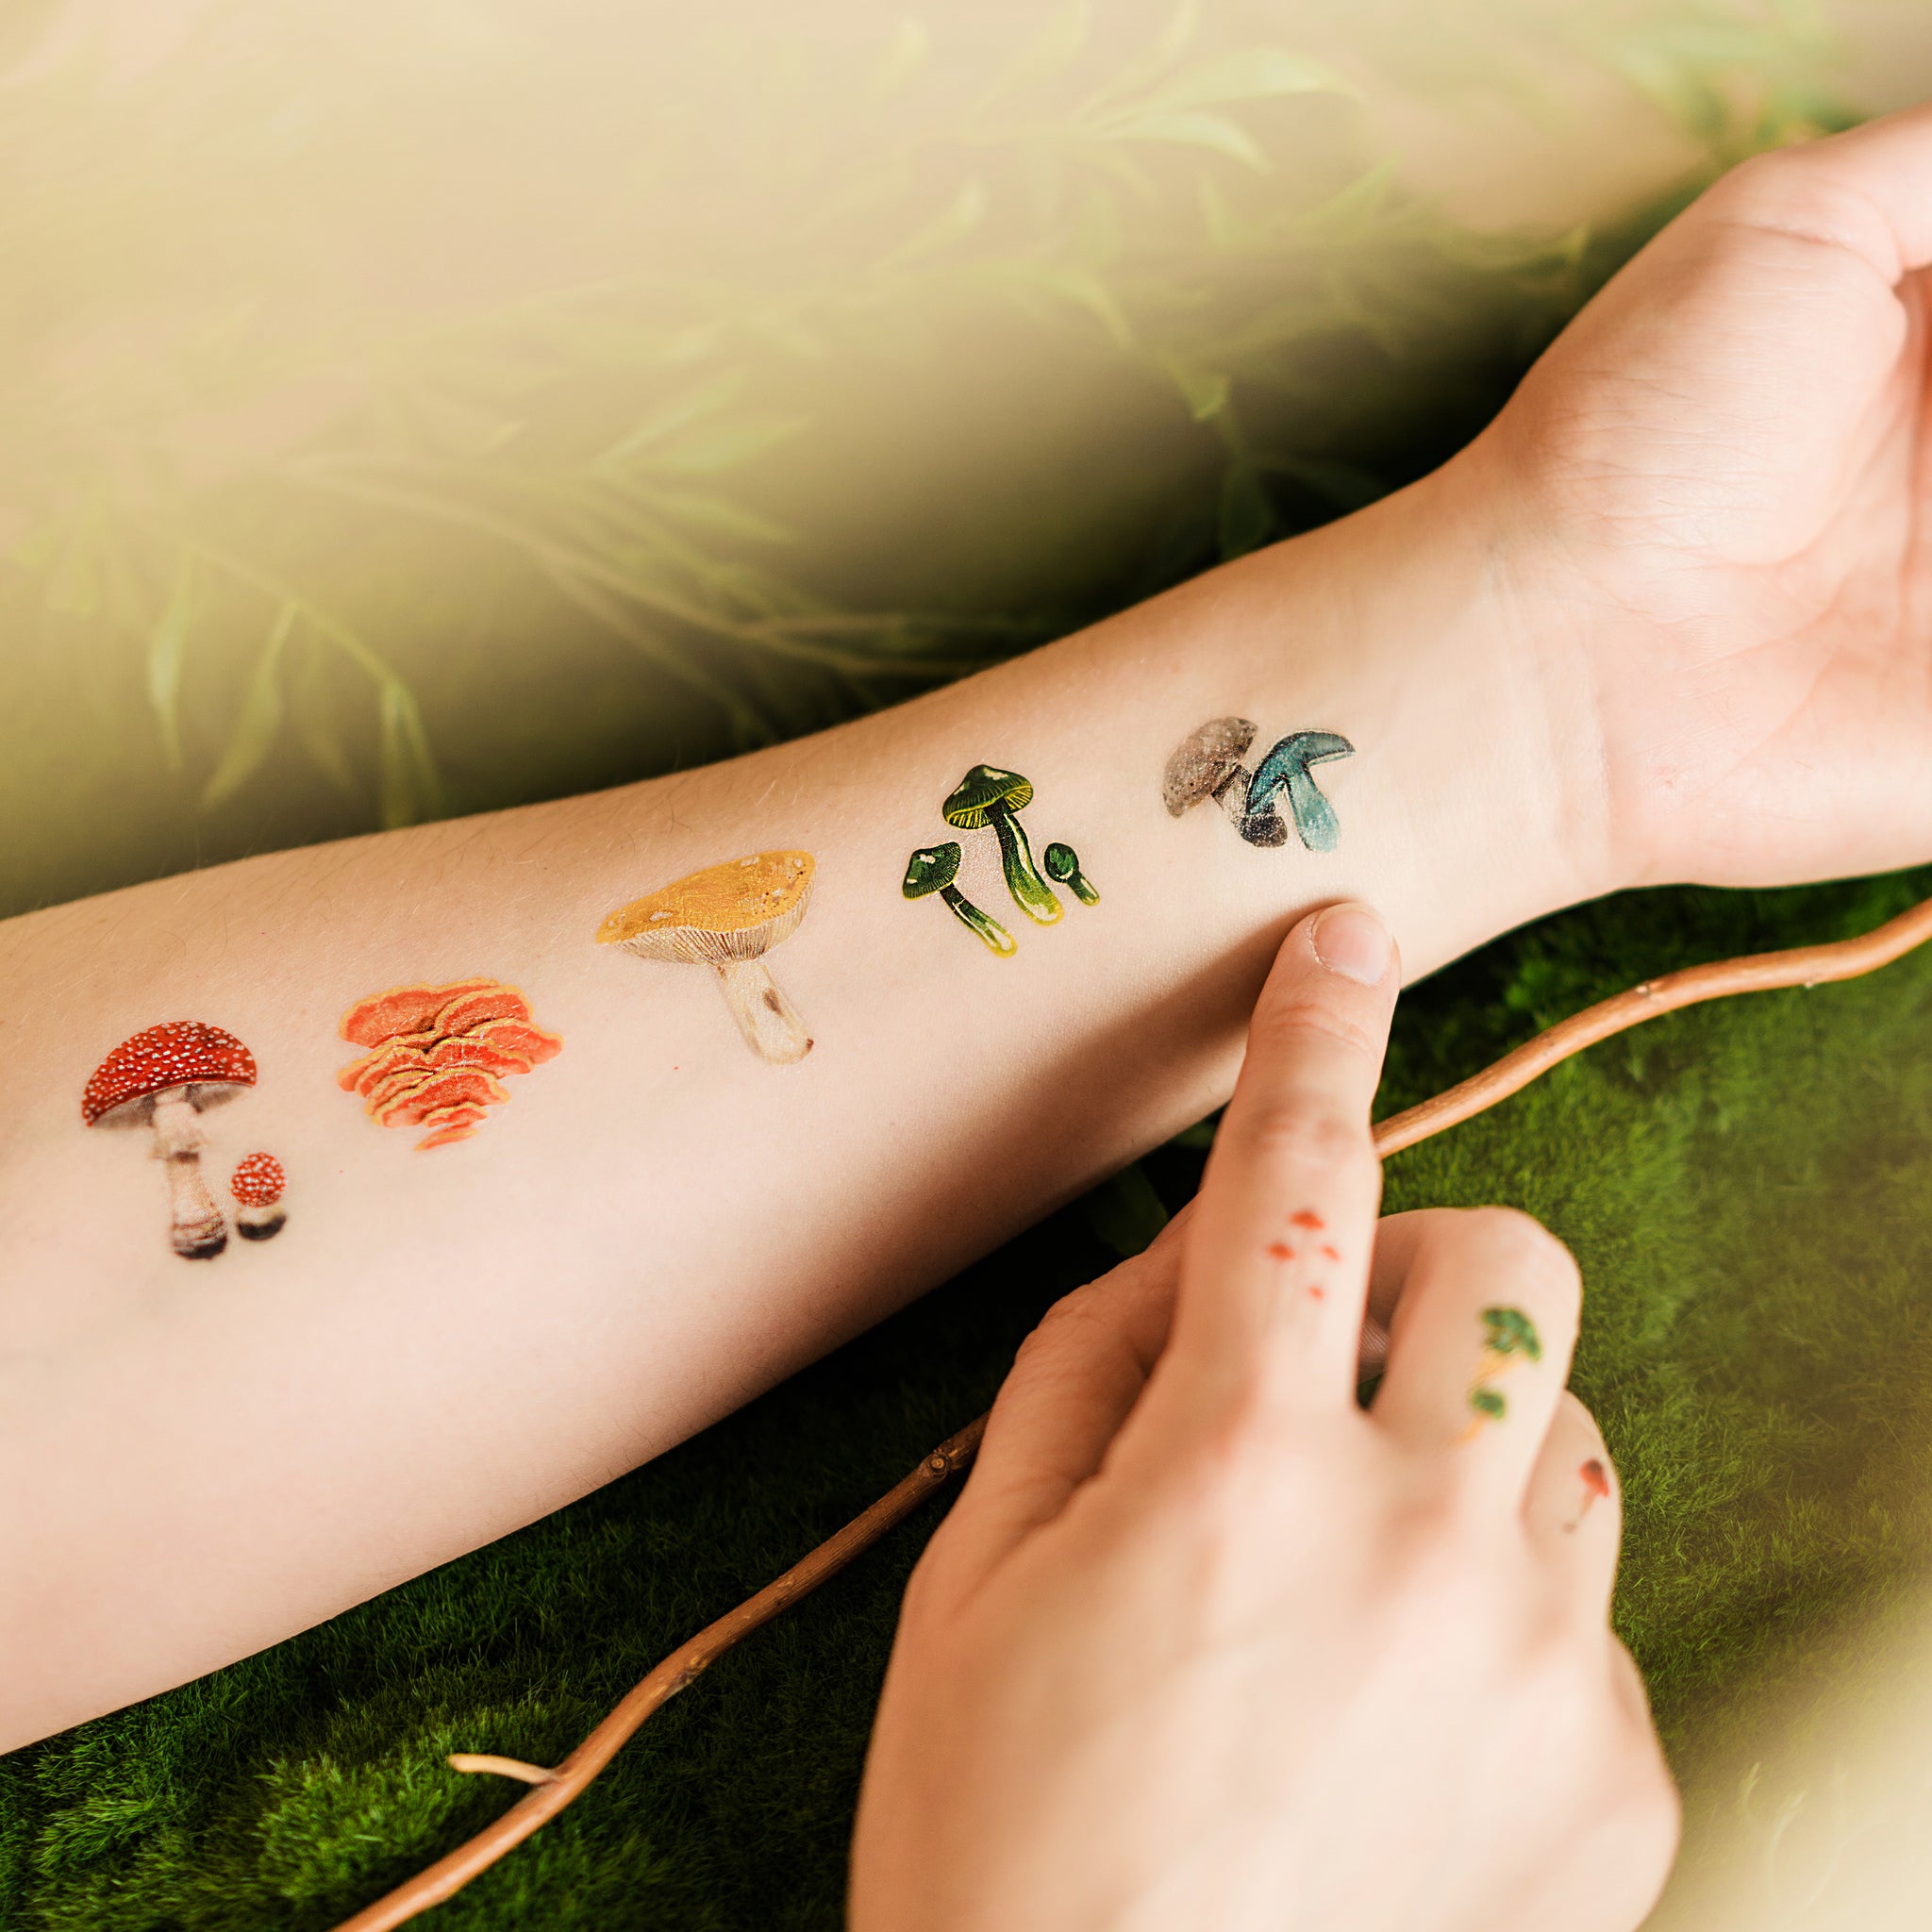 Buy Wild Mushroom Tattoo Multiple Fungi Festival Ready Online in India   Etsy